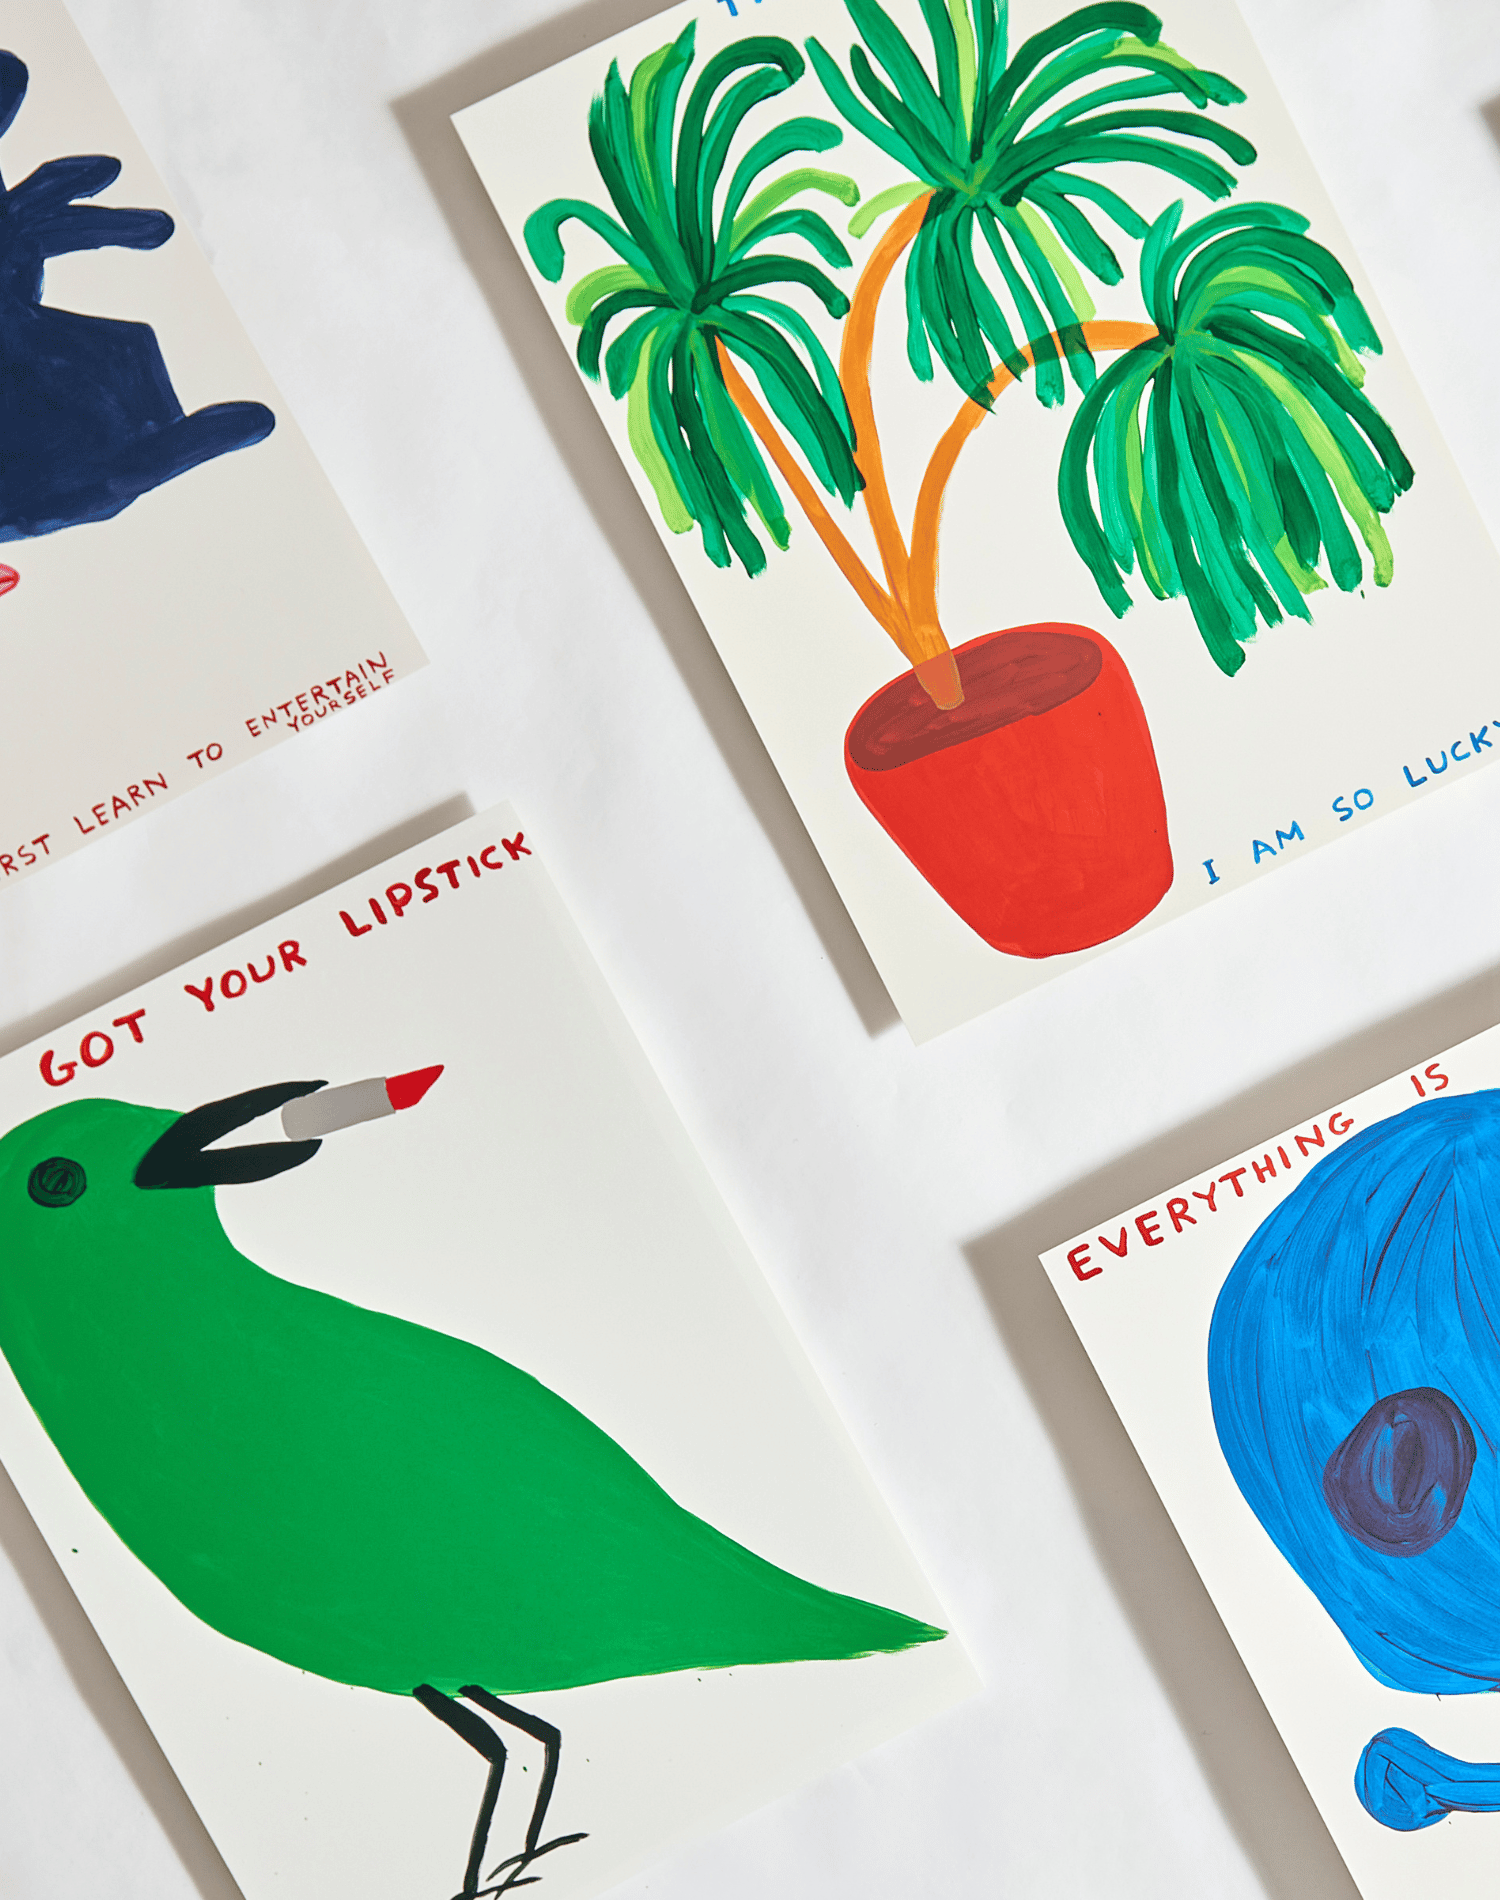 David Shrigley Prints laid out, green bird, blue skull, green plant